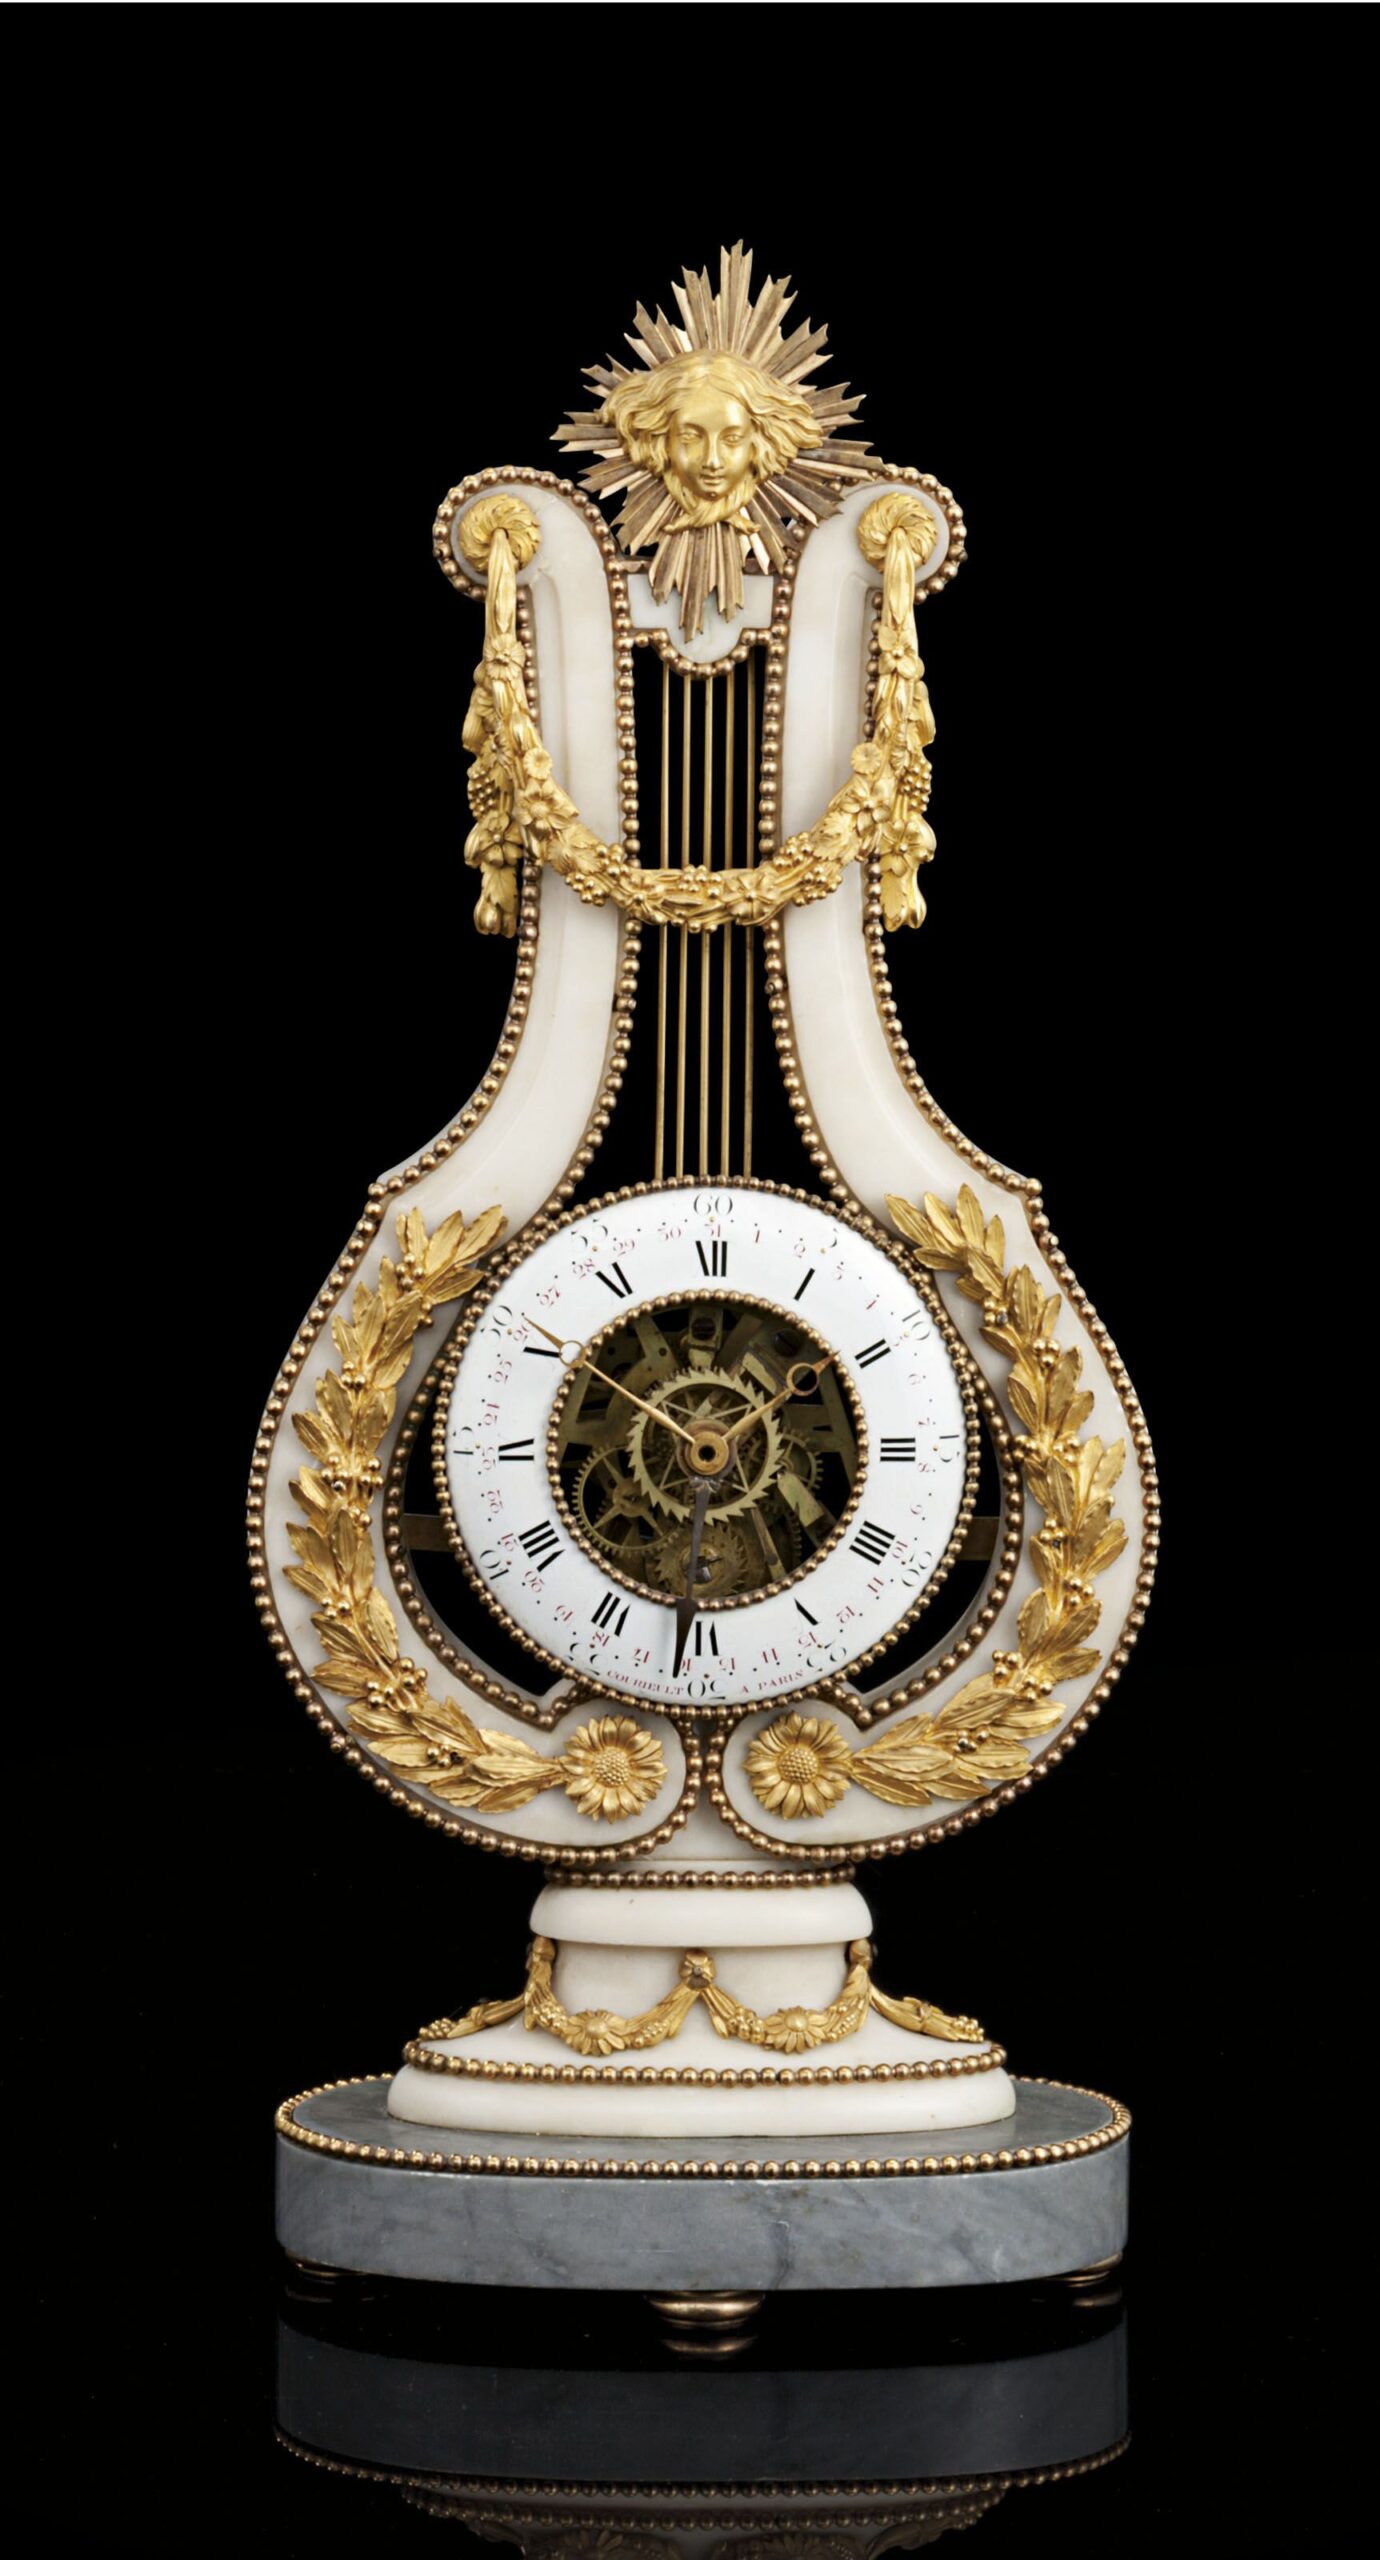 Timeless Sophistication: Add Elegance with Fancy Clocks